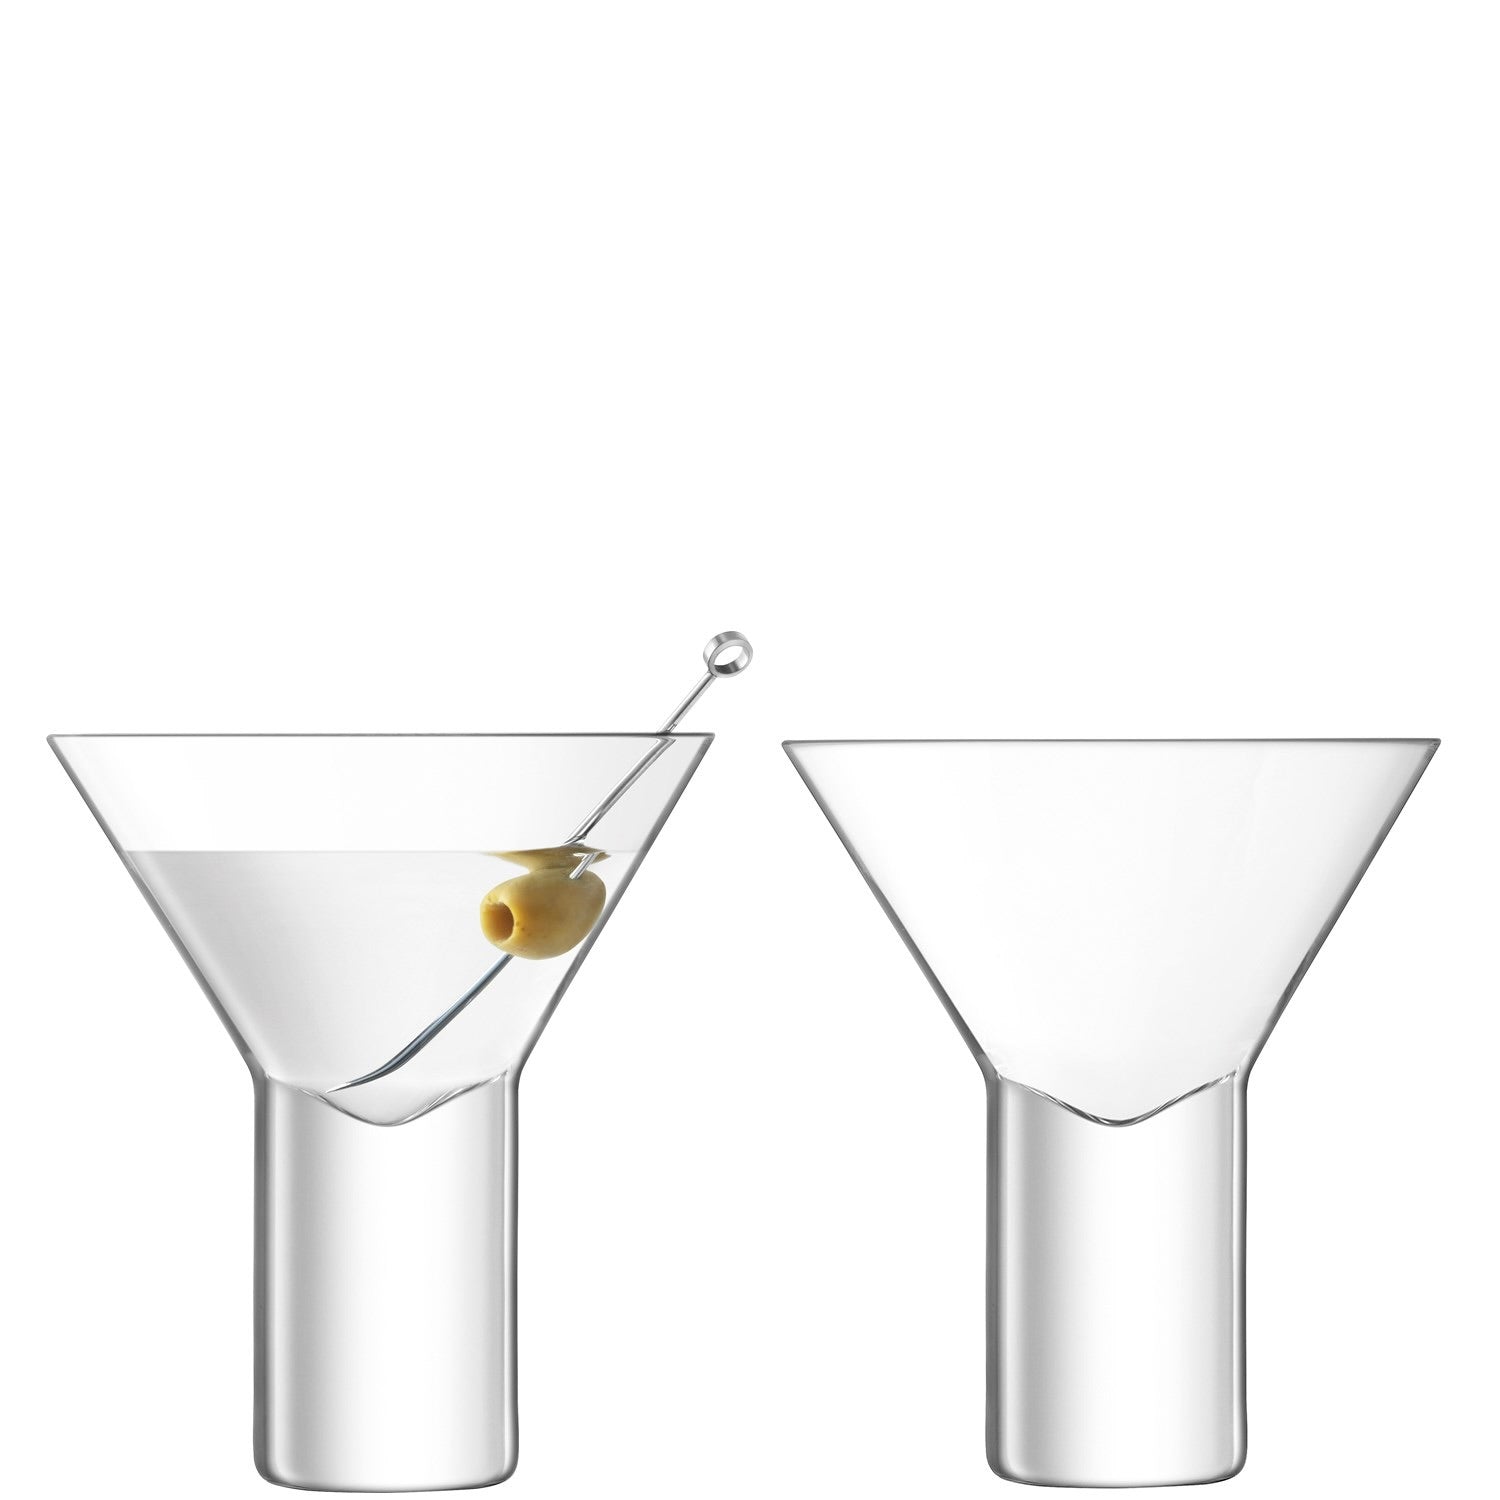 Vodka Cocktail Glass - set of 2 by LSA